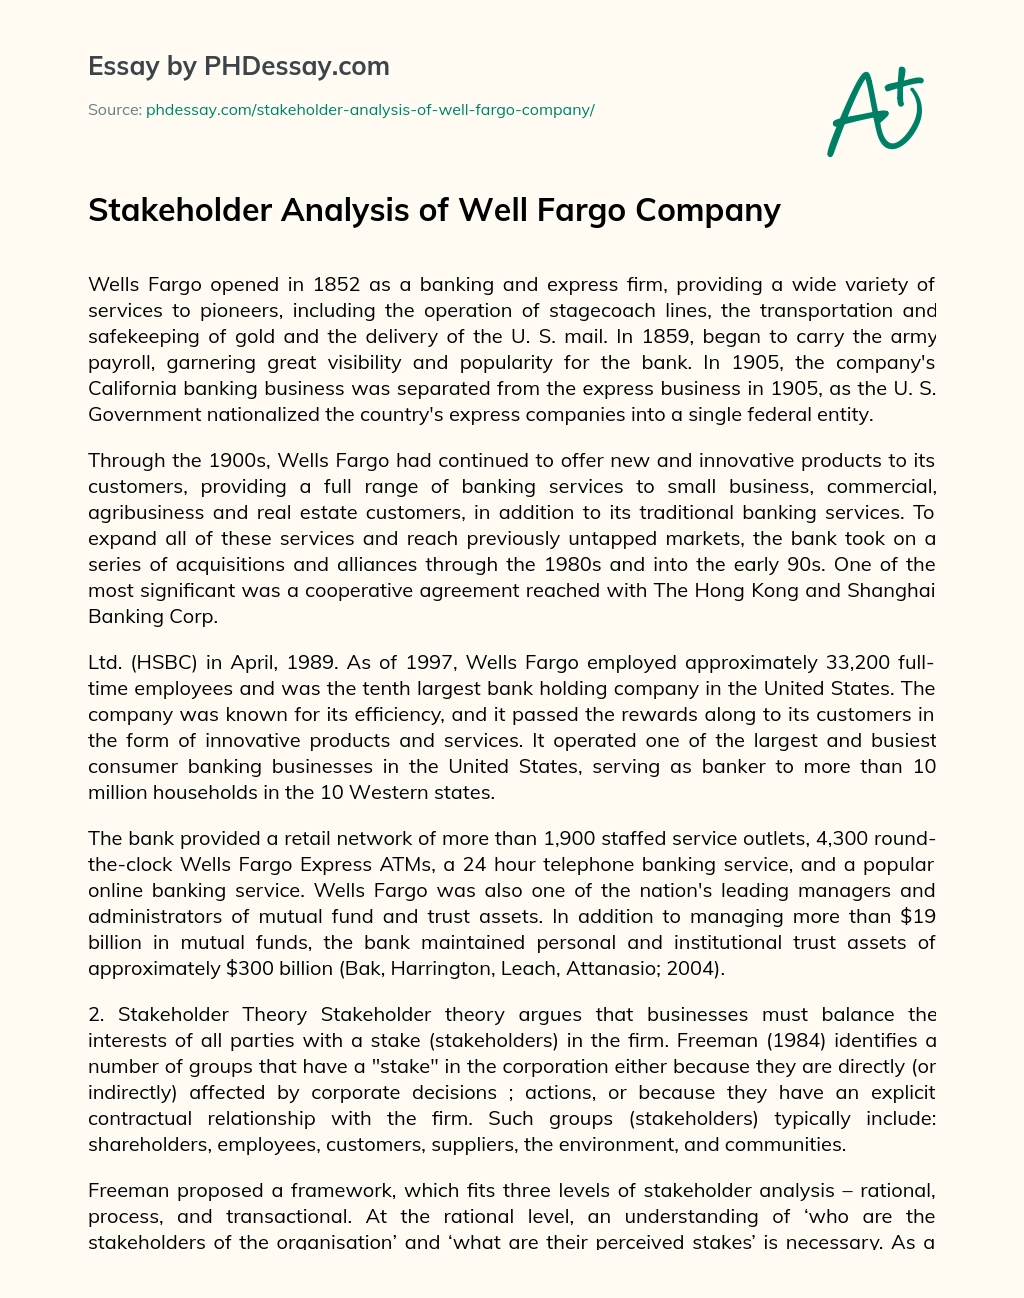 Stakeholder Analysis of Well Fargo Company essay